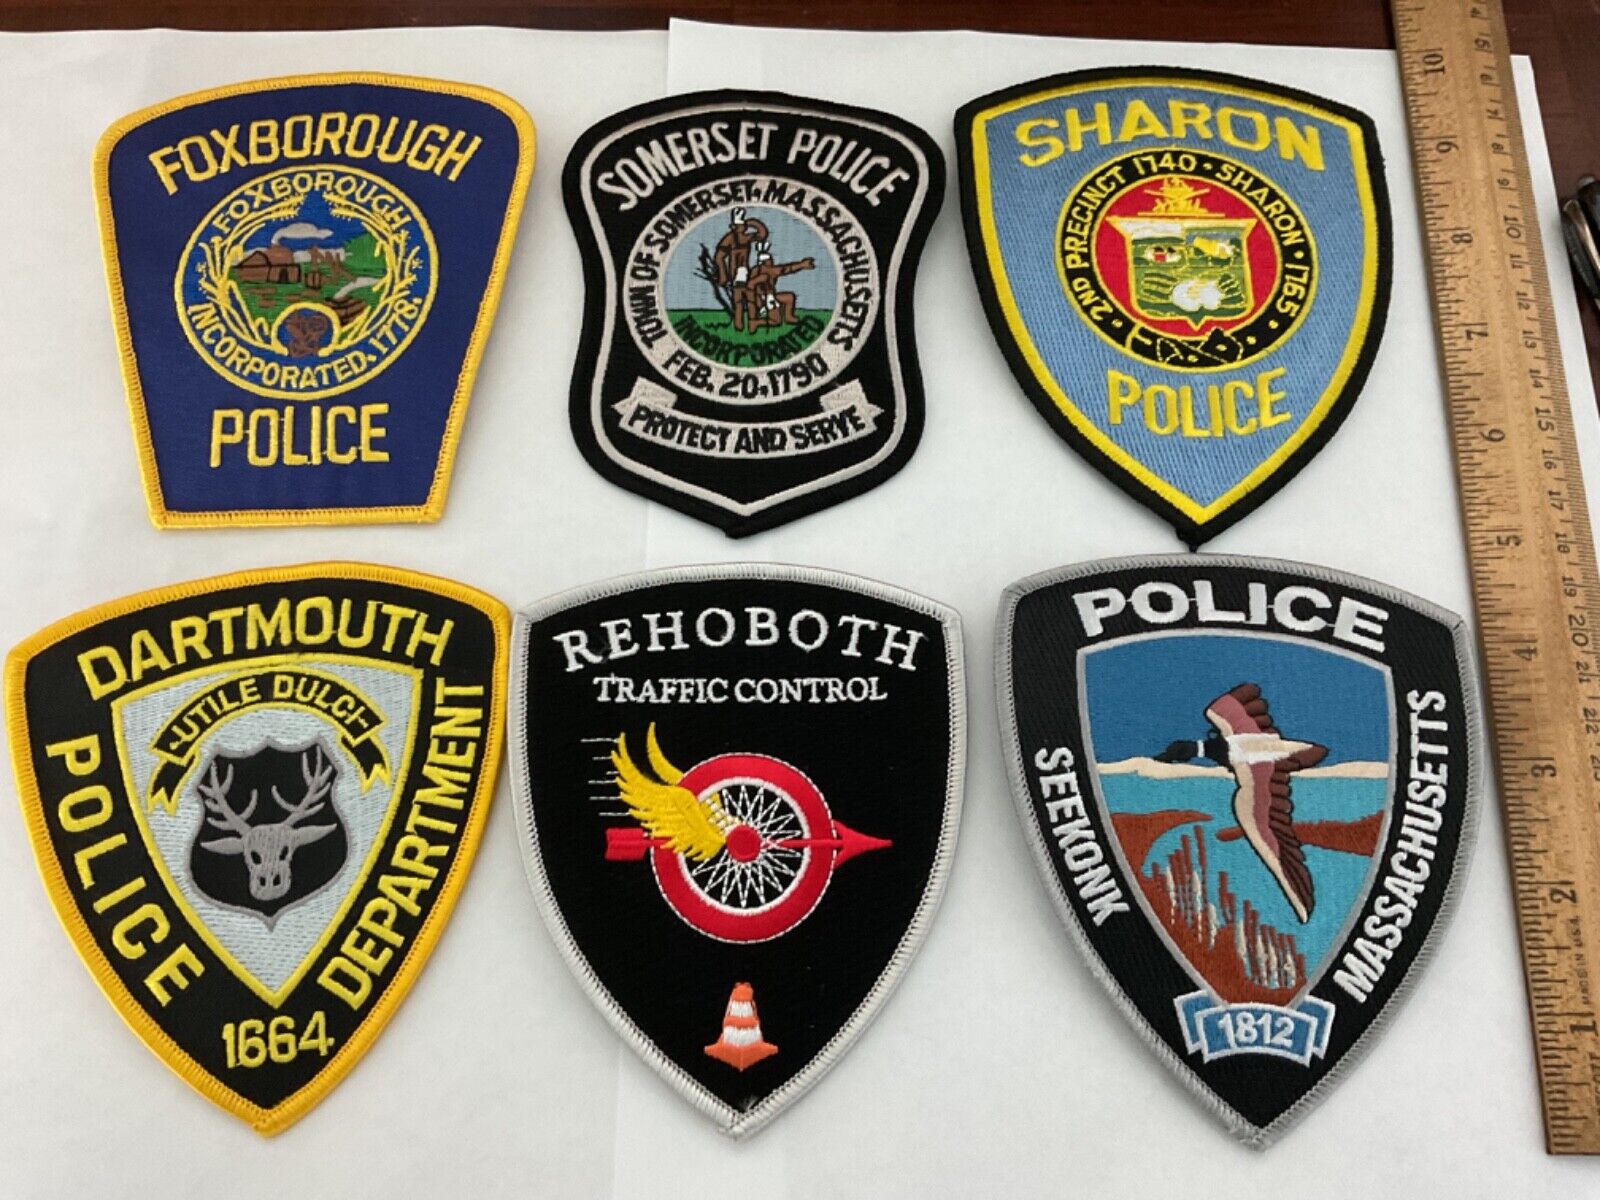 Police Law Enforcement collectors patch set 6 pieces full size new